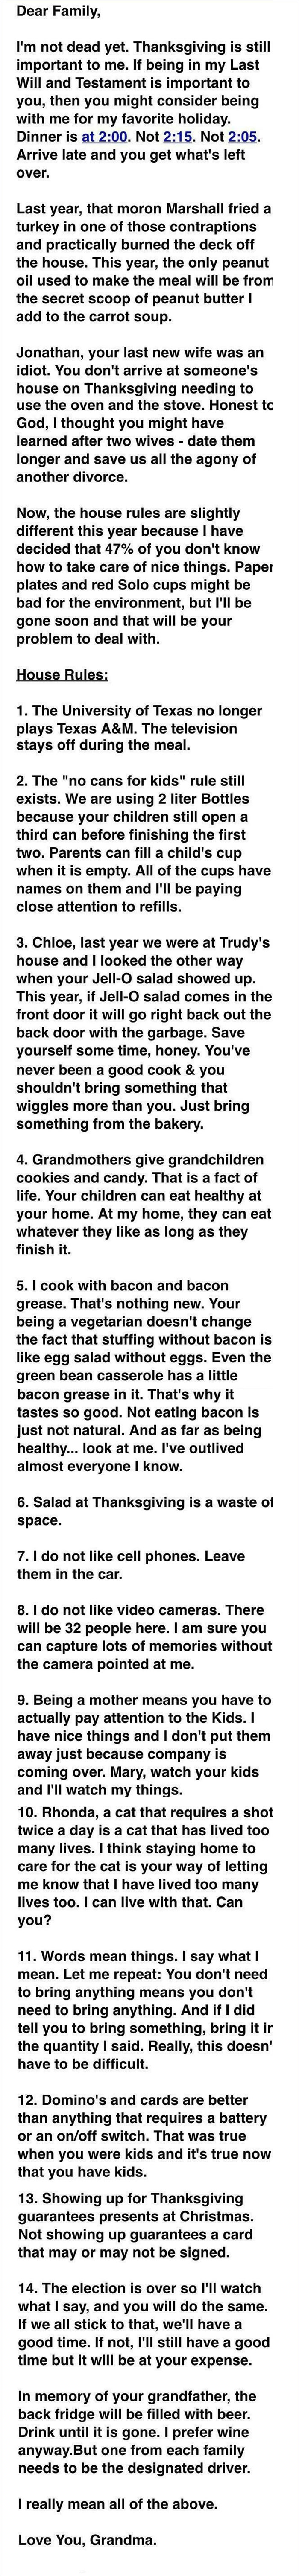 Grandma's Thanksgiving Rules